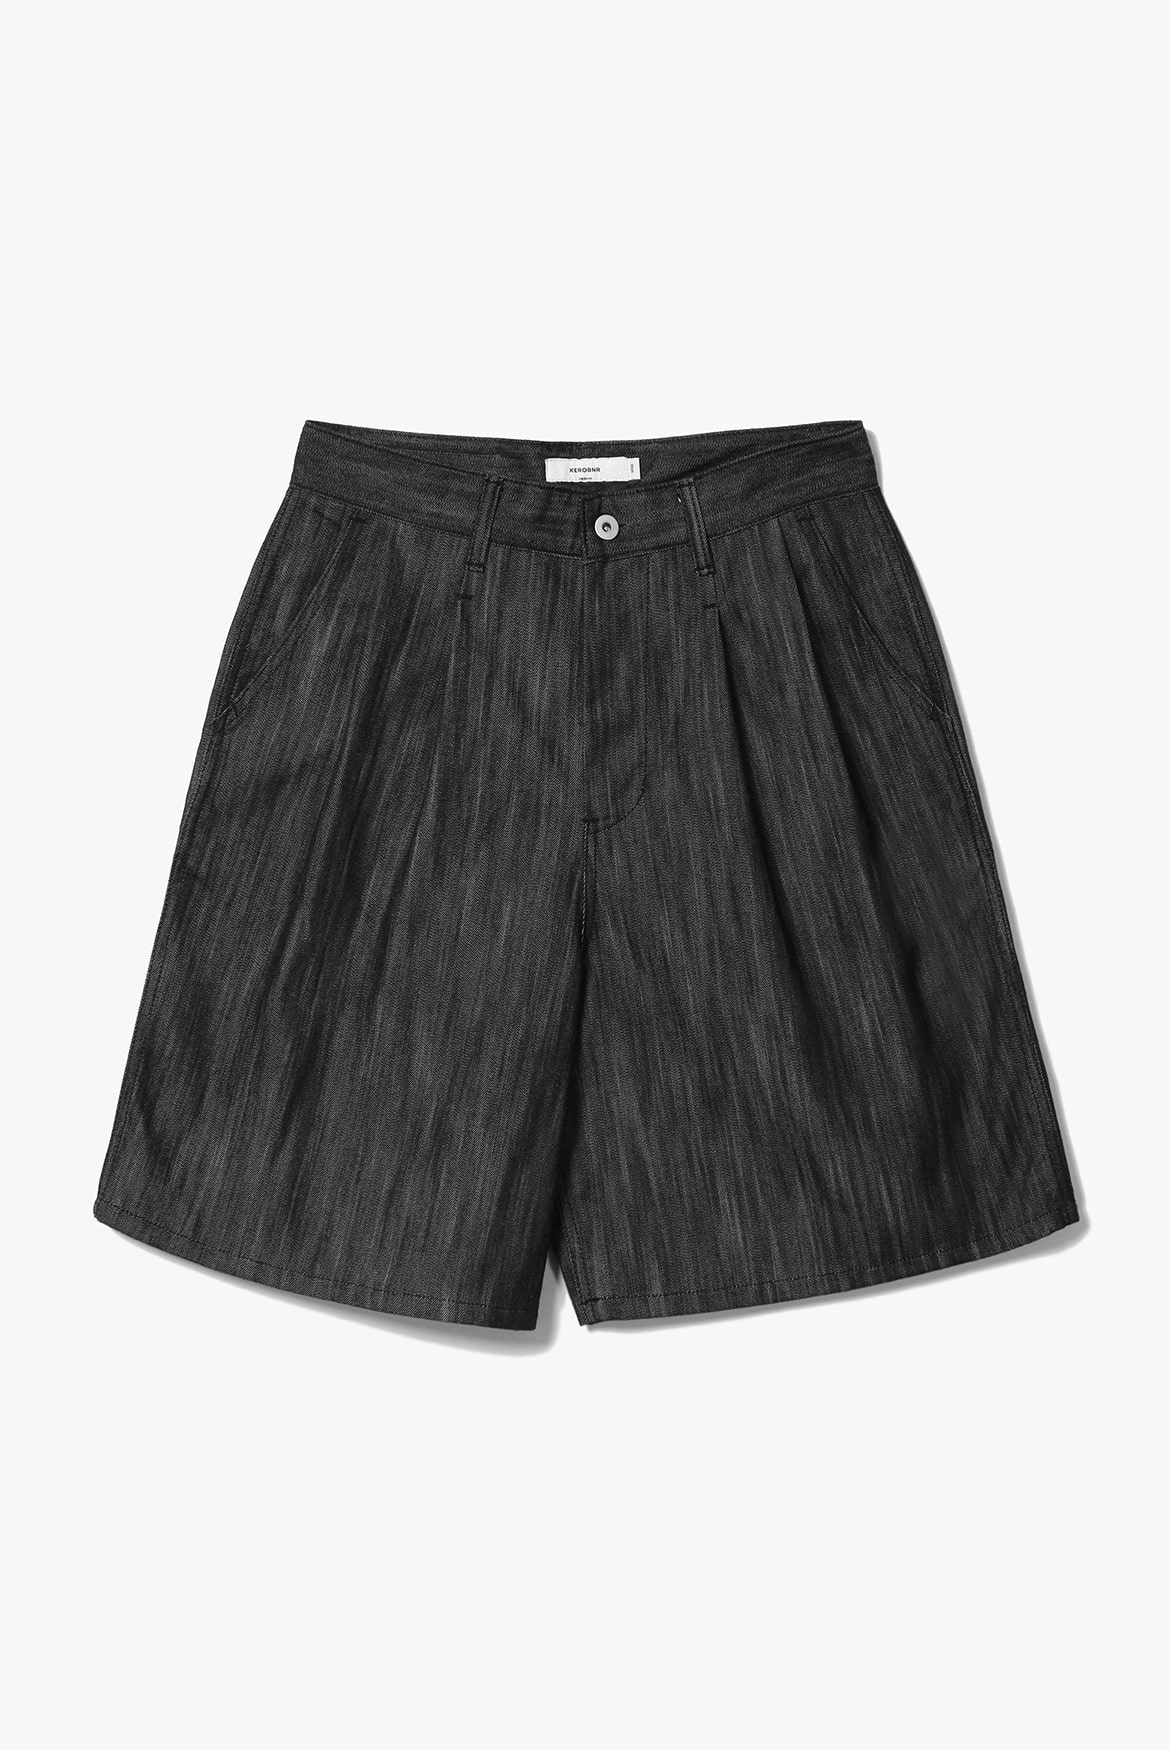 Clean Denim Bermuda Two Tuck Shorts [Black]